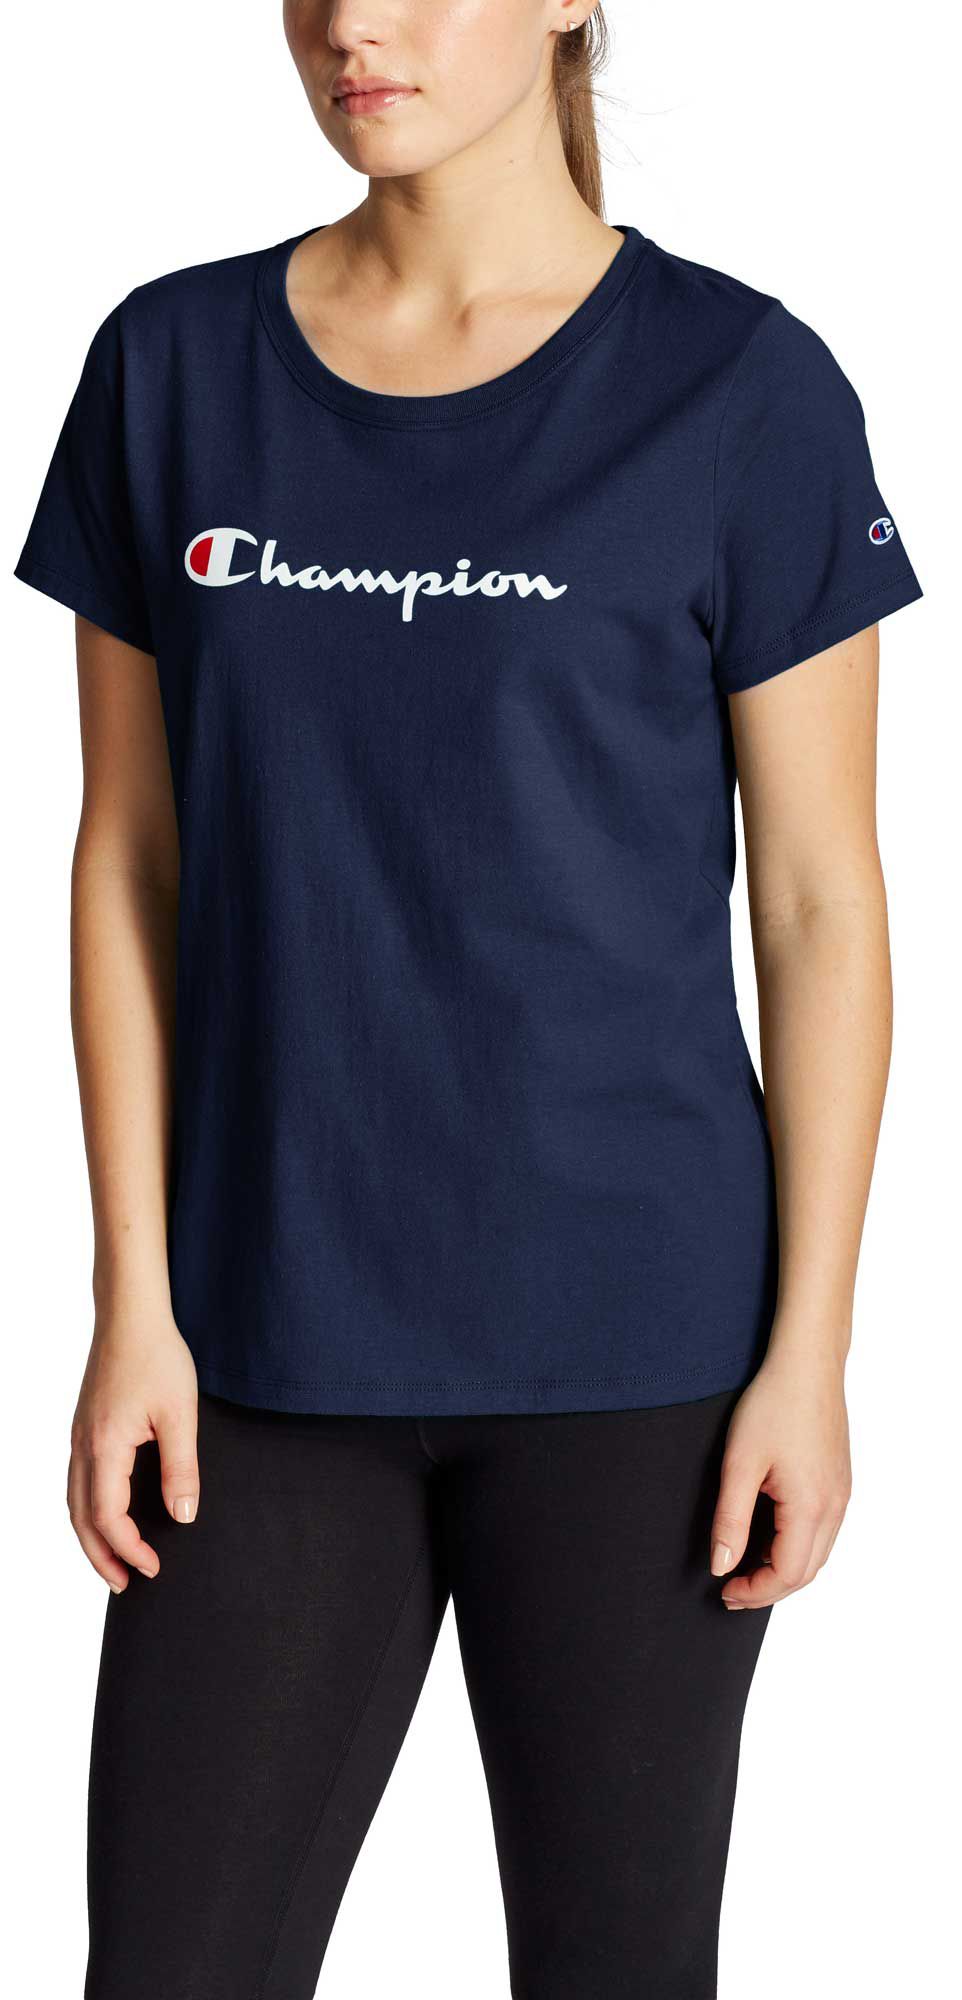 champion logo shirt women's